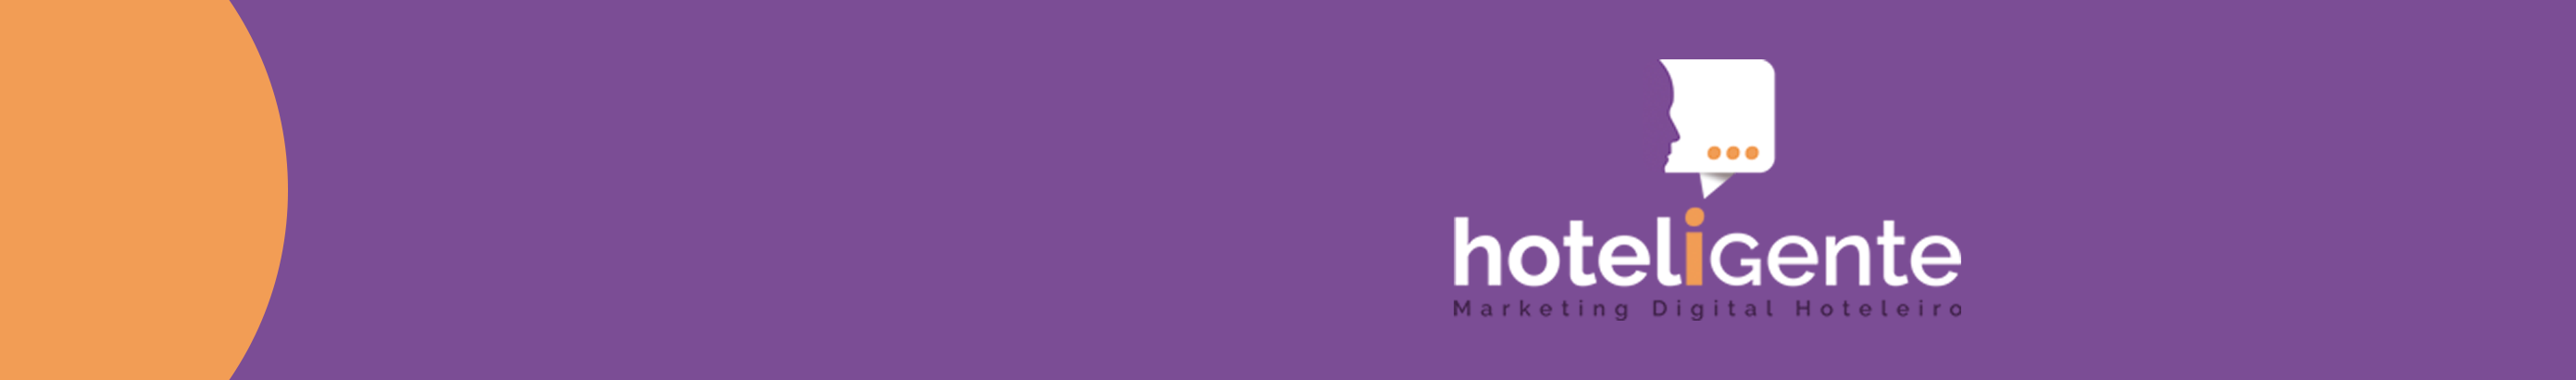 Hoteligente Marketing Hoteleiro's profile banner